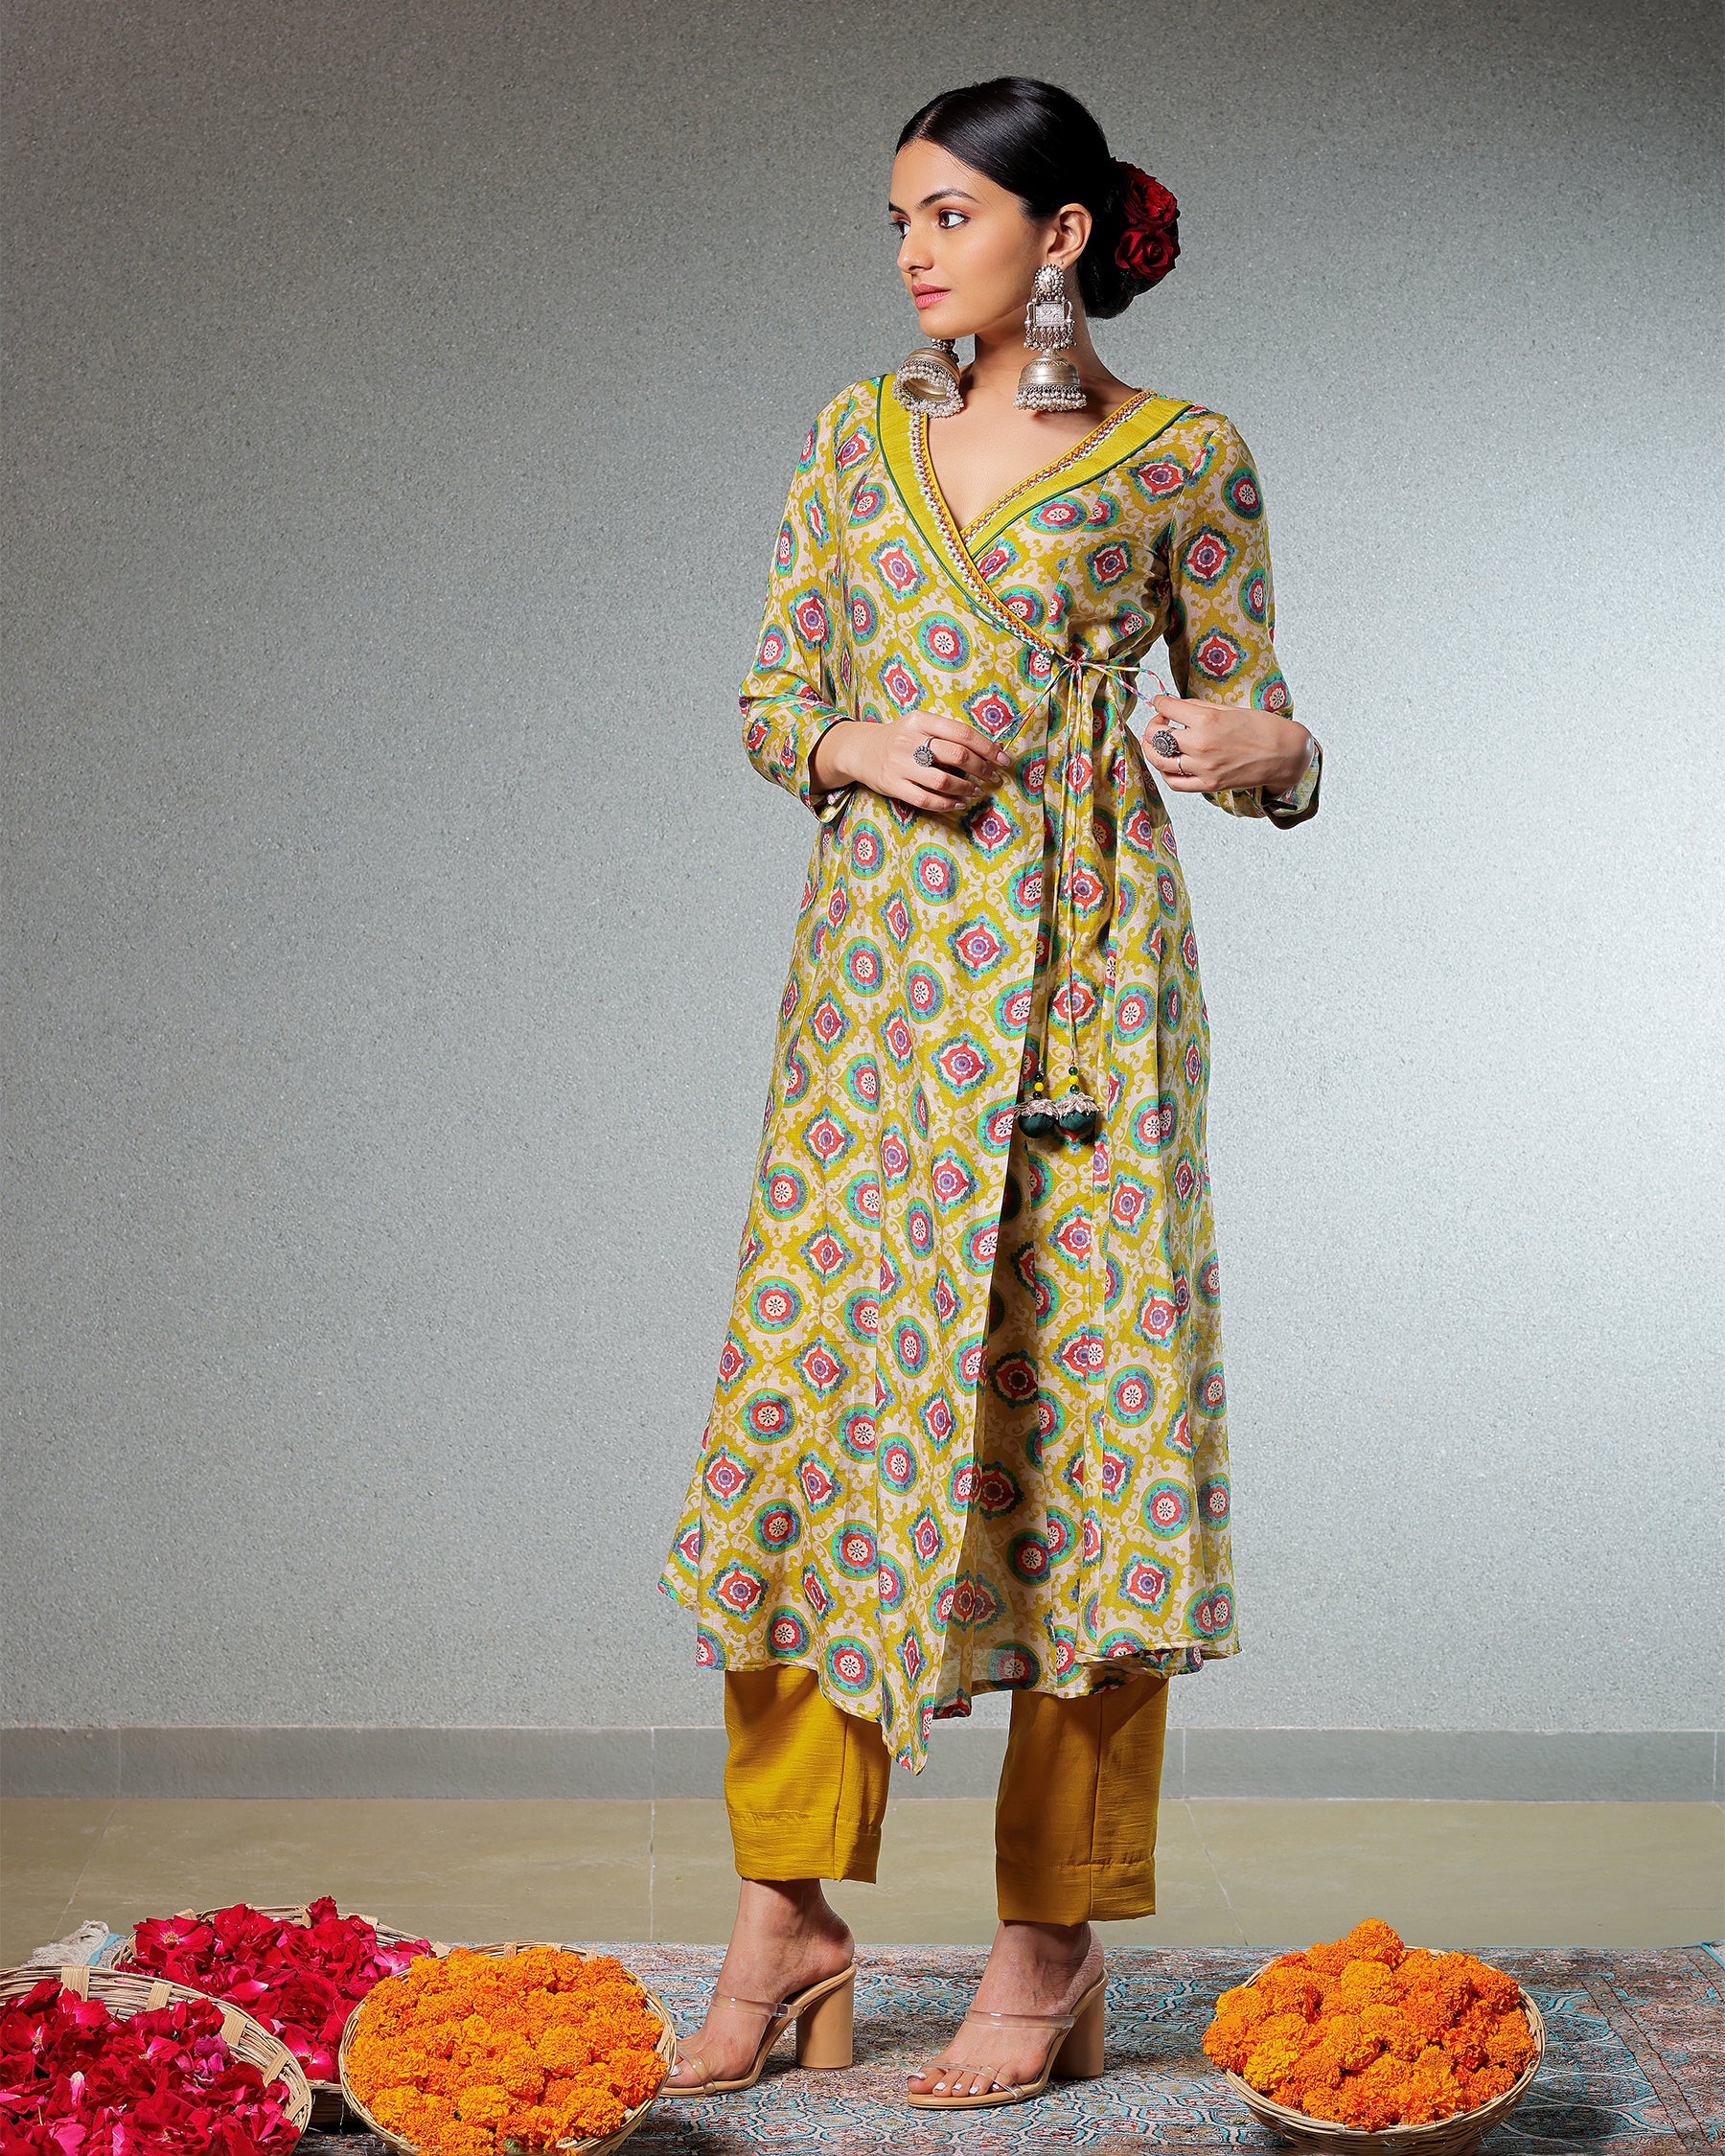 Taskeen Daffodil Yellow 3 Pcs Anarkali Suit